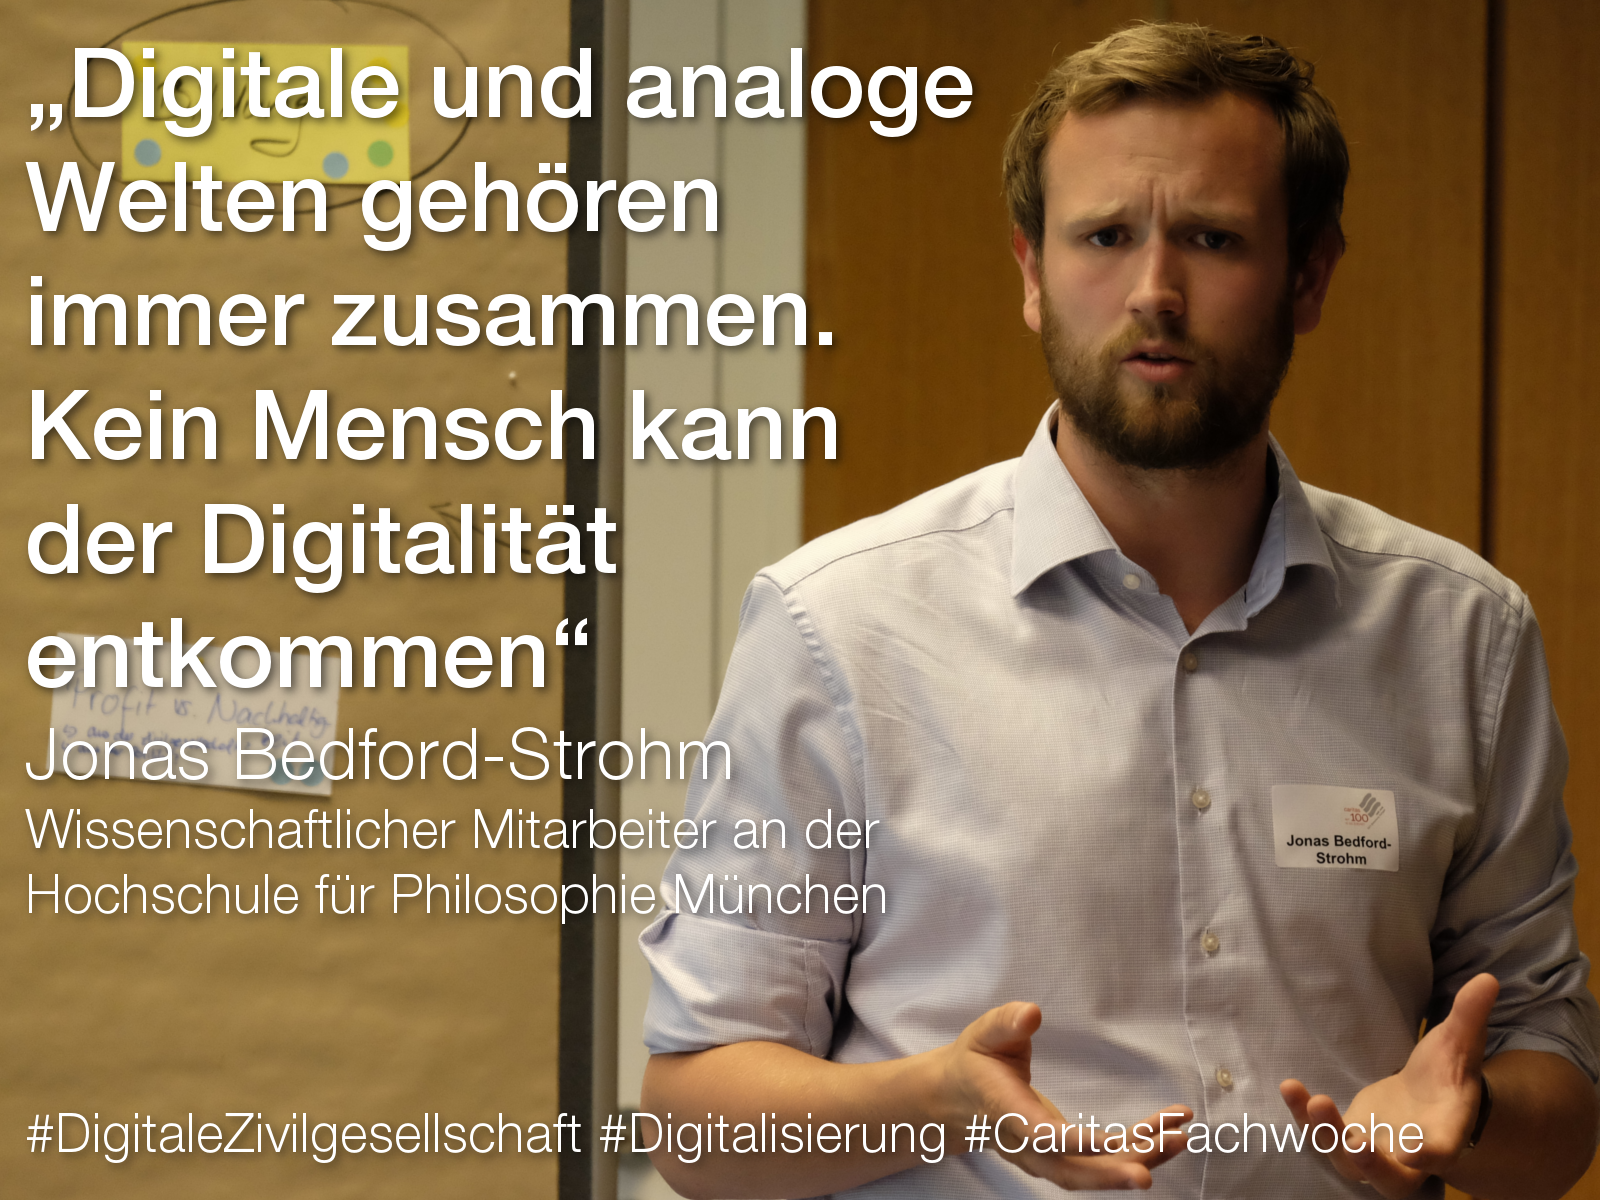 Digitale Zivilgesellschaft - Jonas Bedford-Strohm